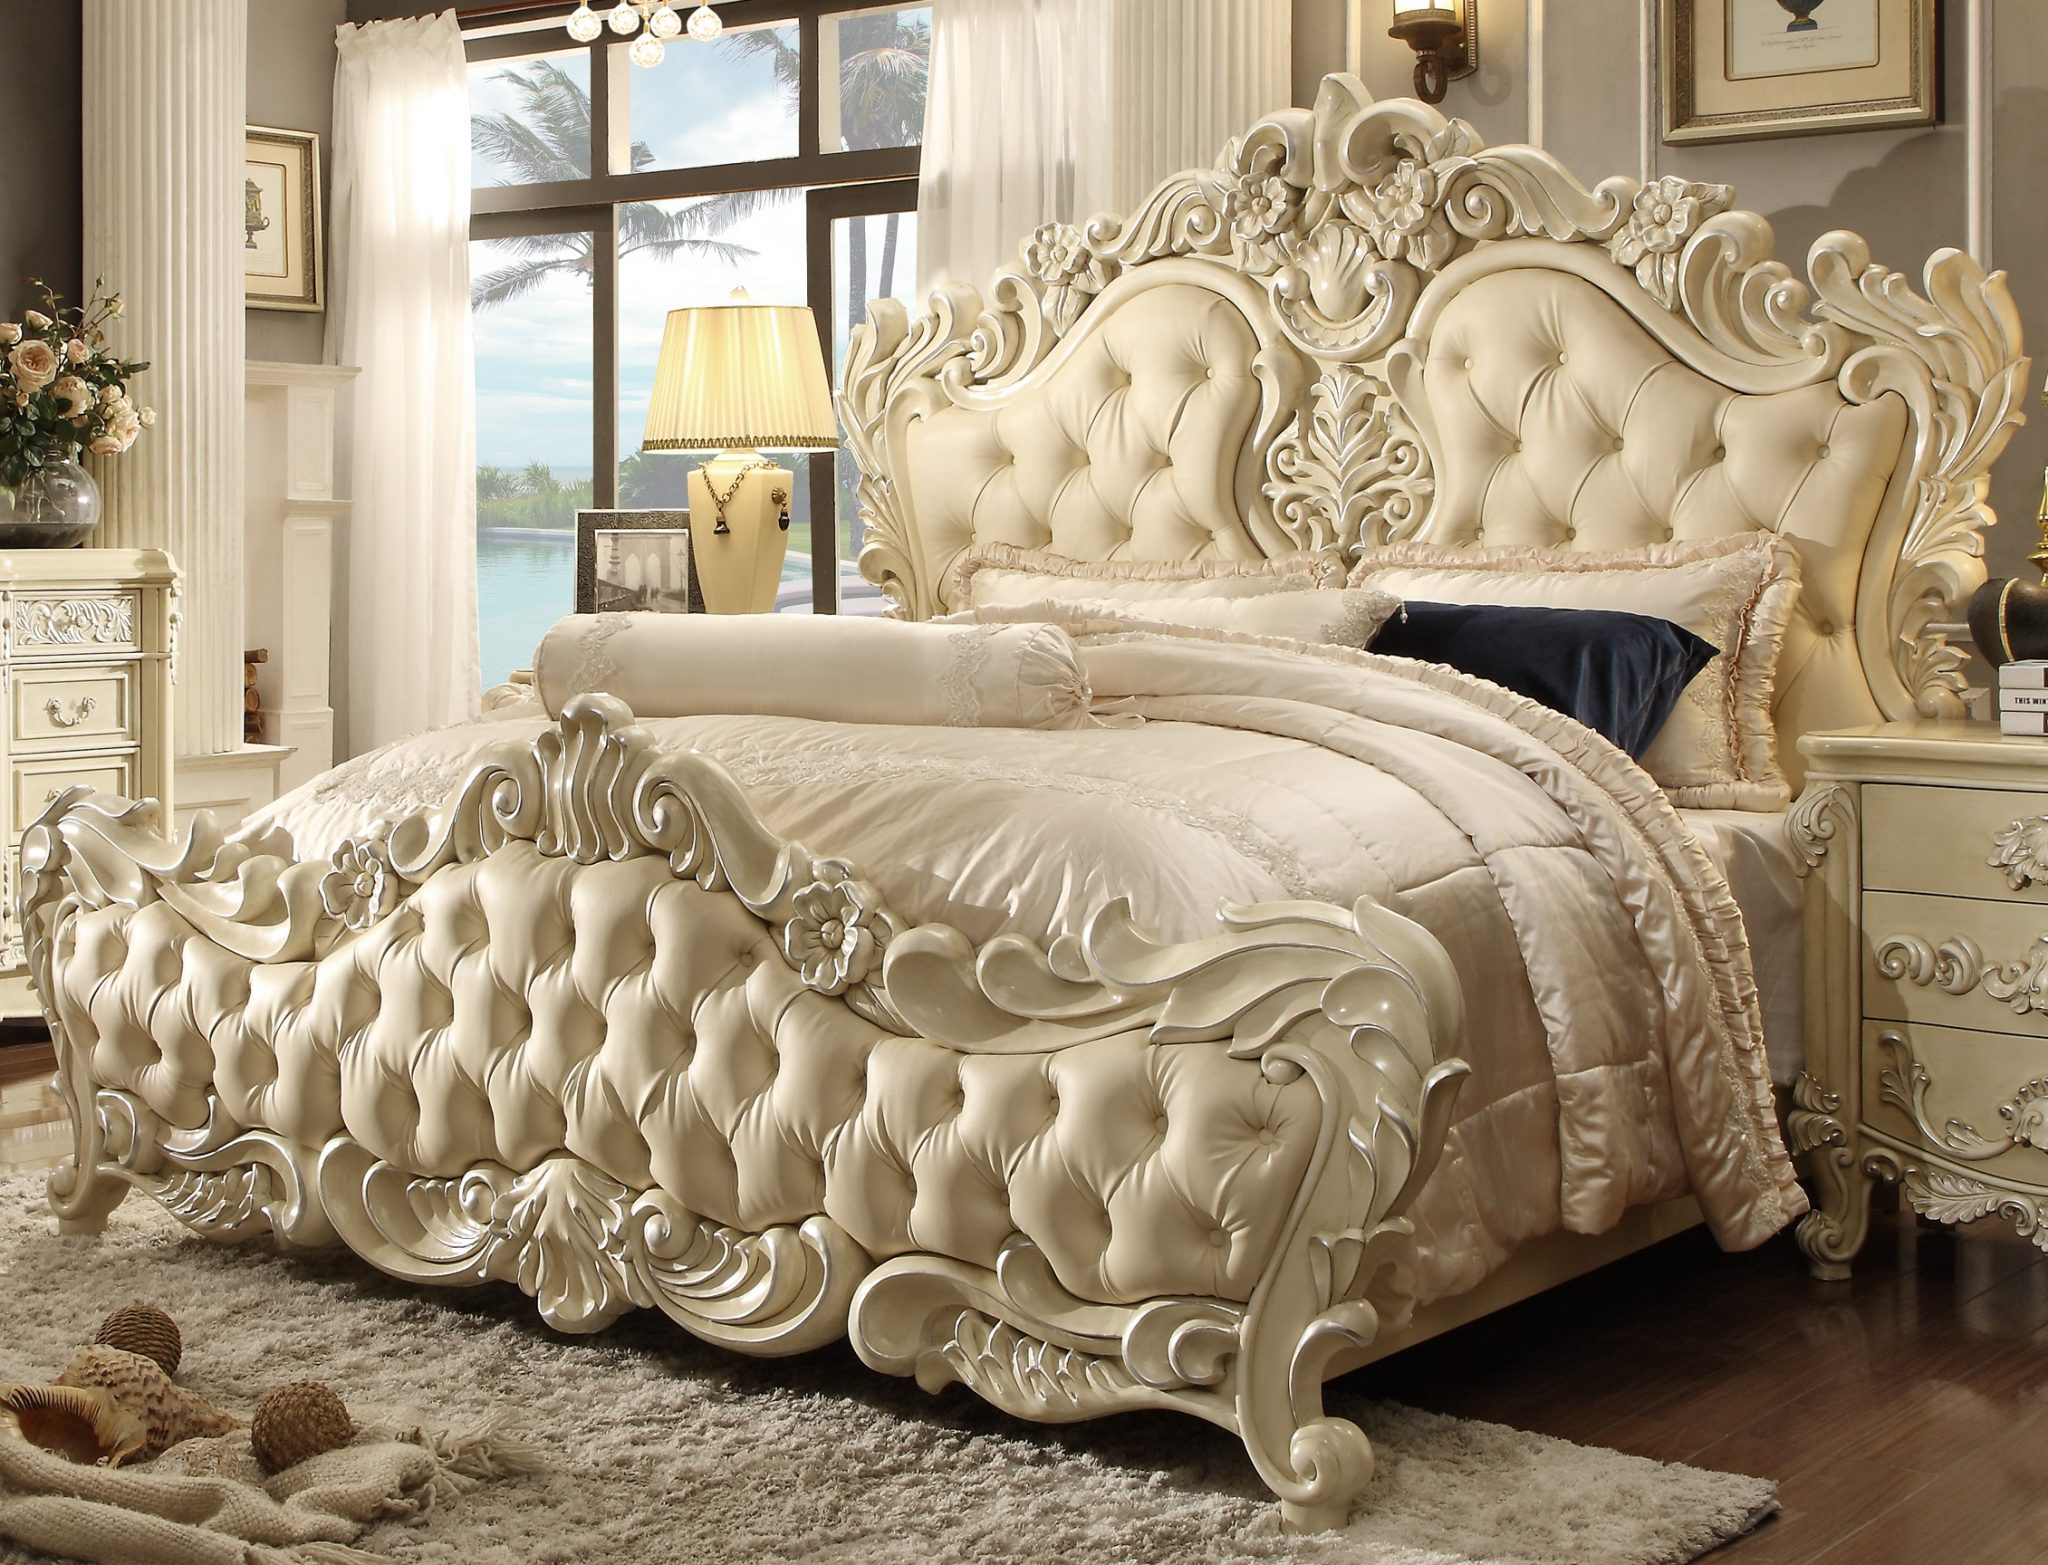 25 Best Bed Design Hd Image Home Decor News